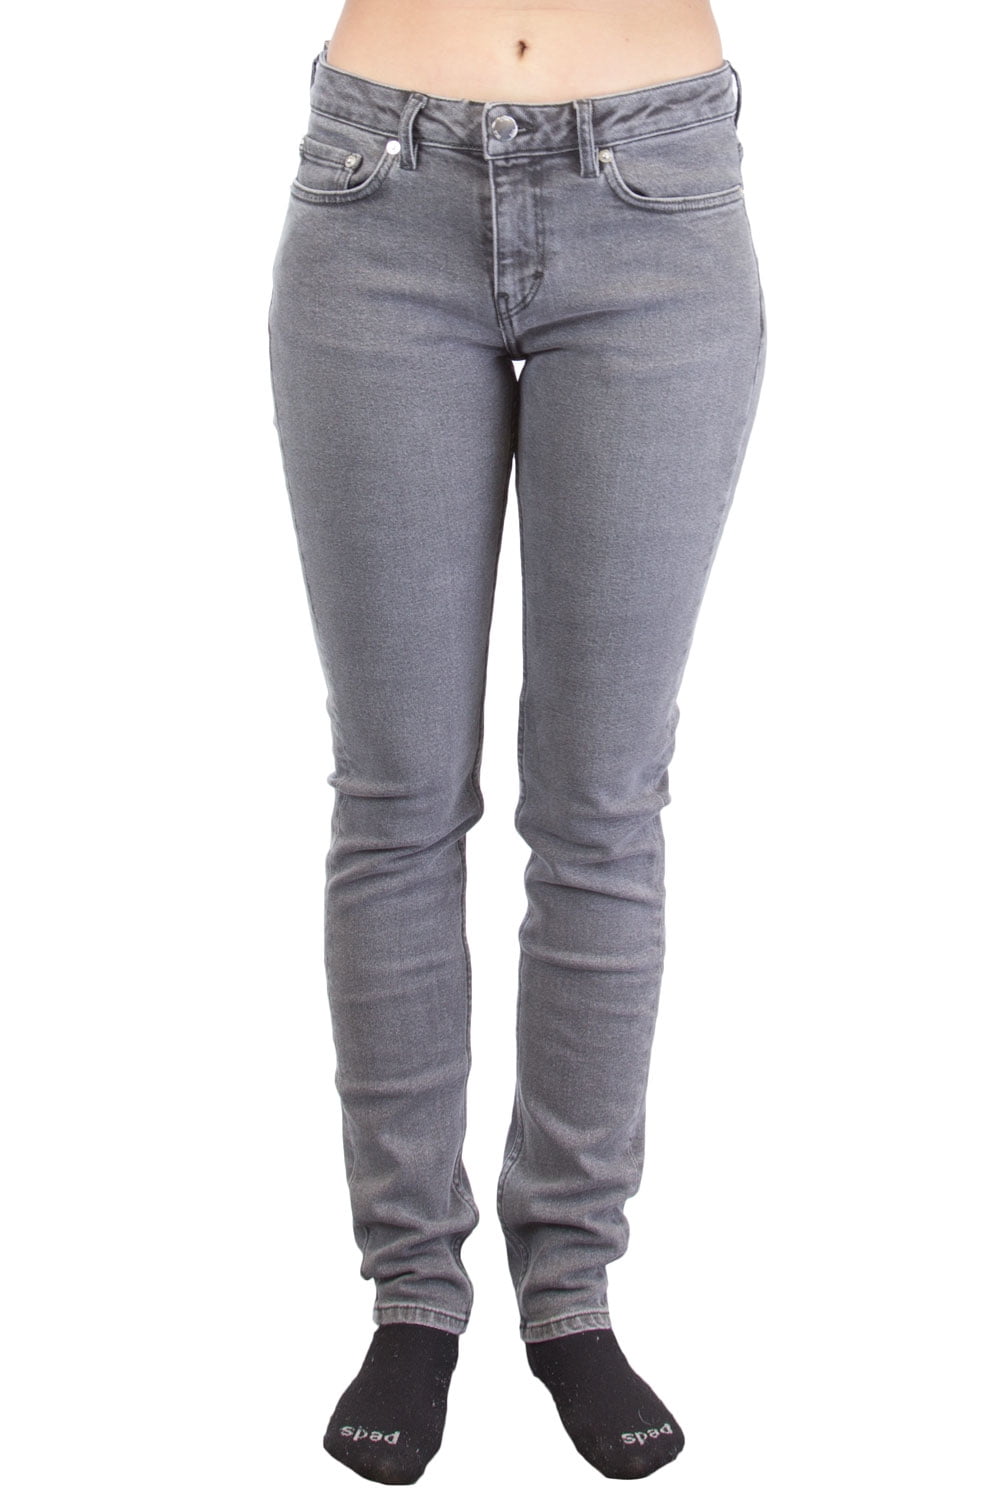 BLK DNM Women's Ferris Grey Super Skinny Jeans #BFRDJ07 $175 NWT 